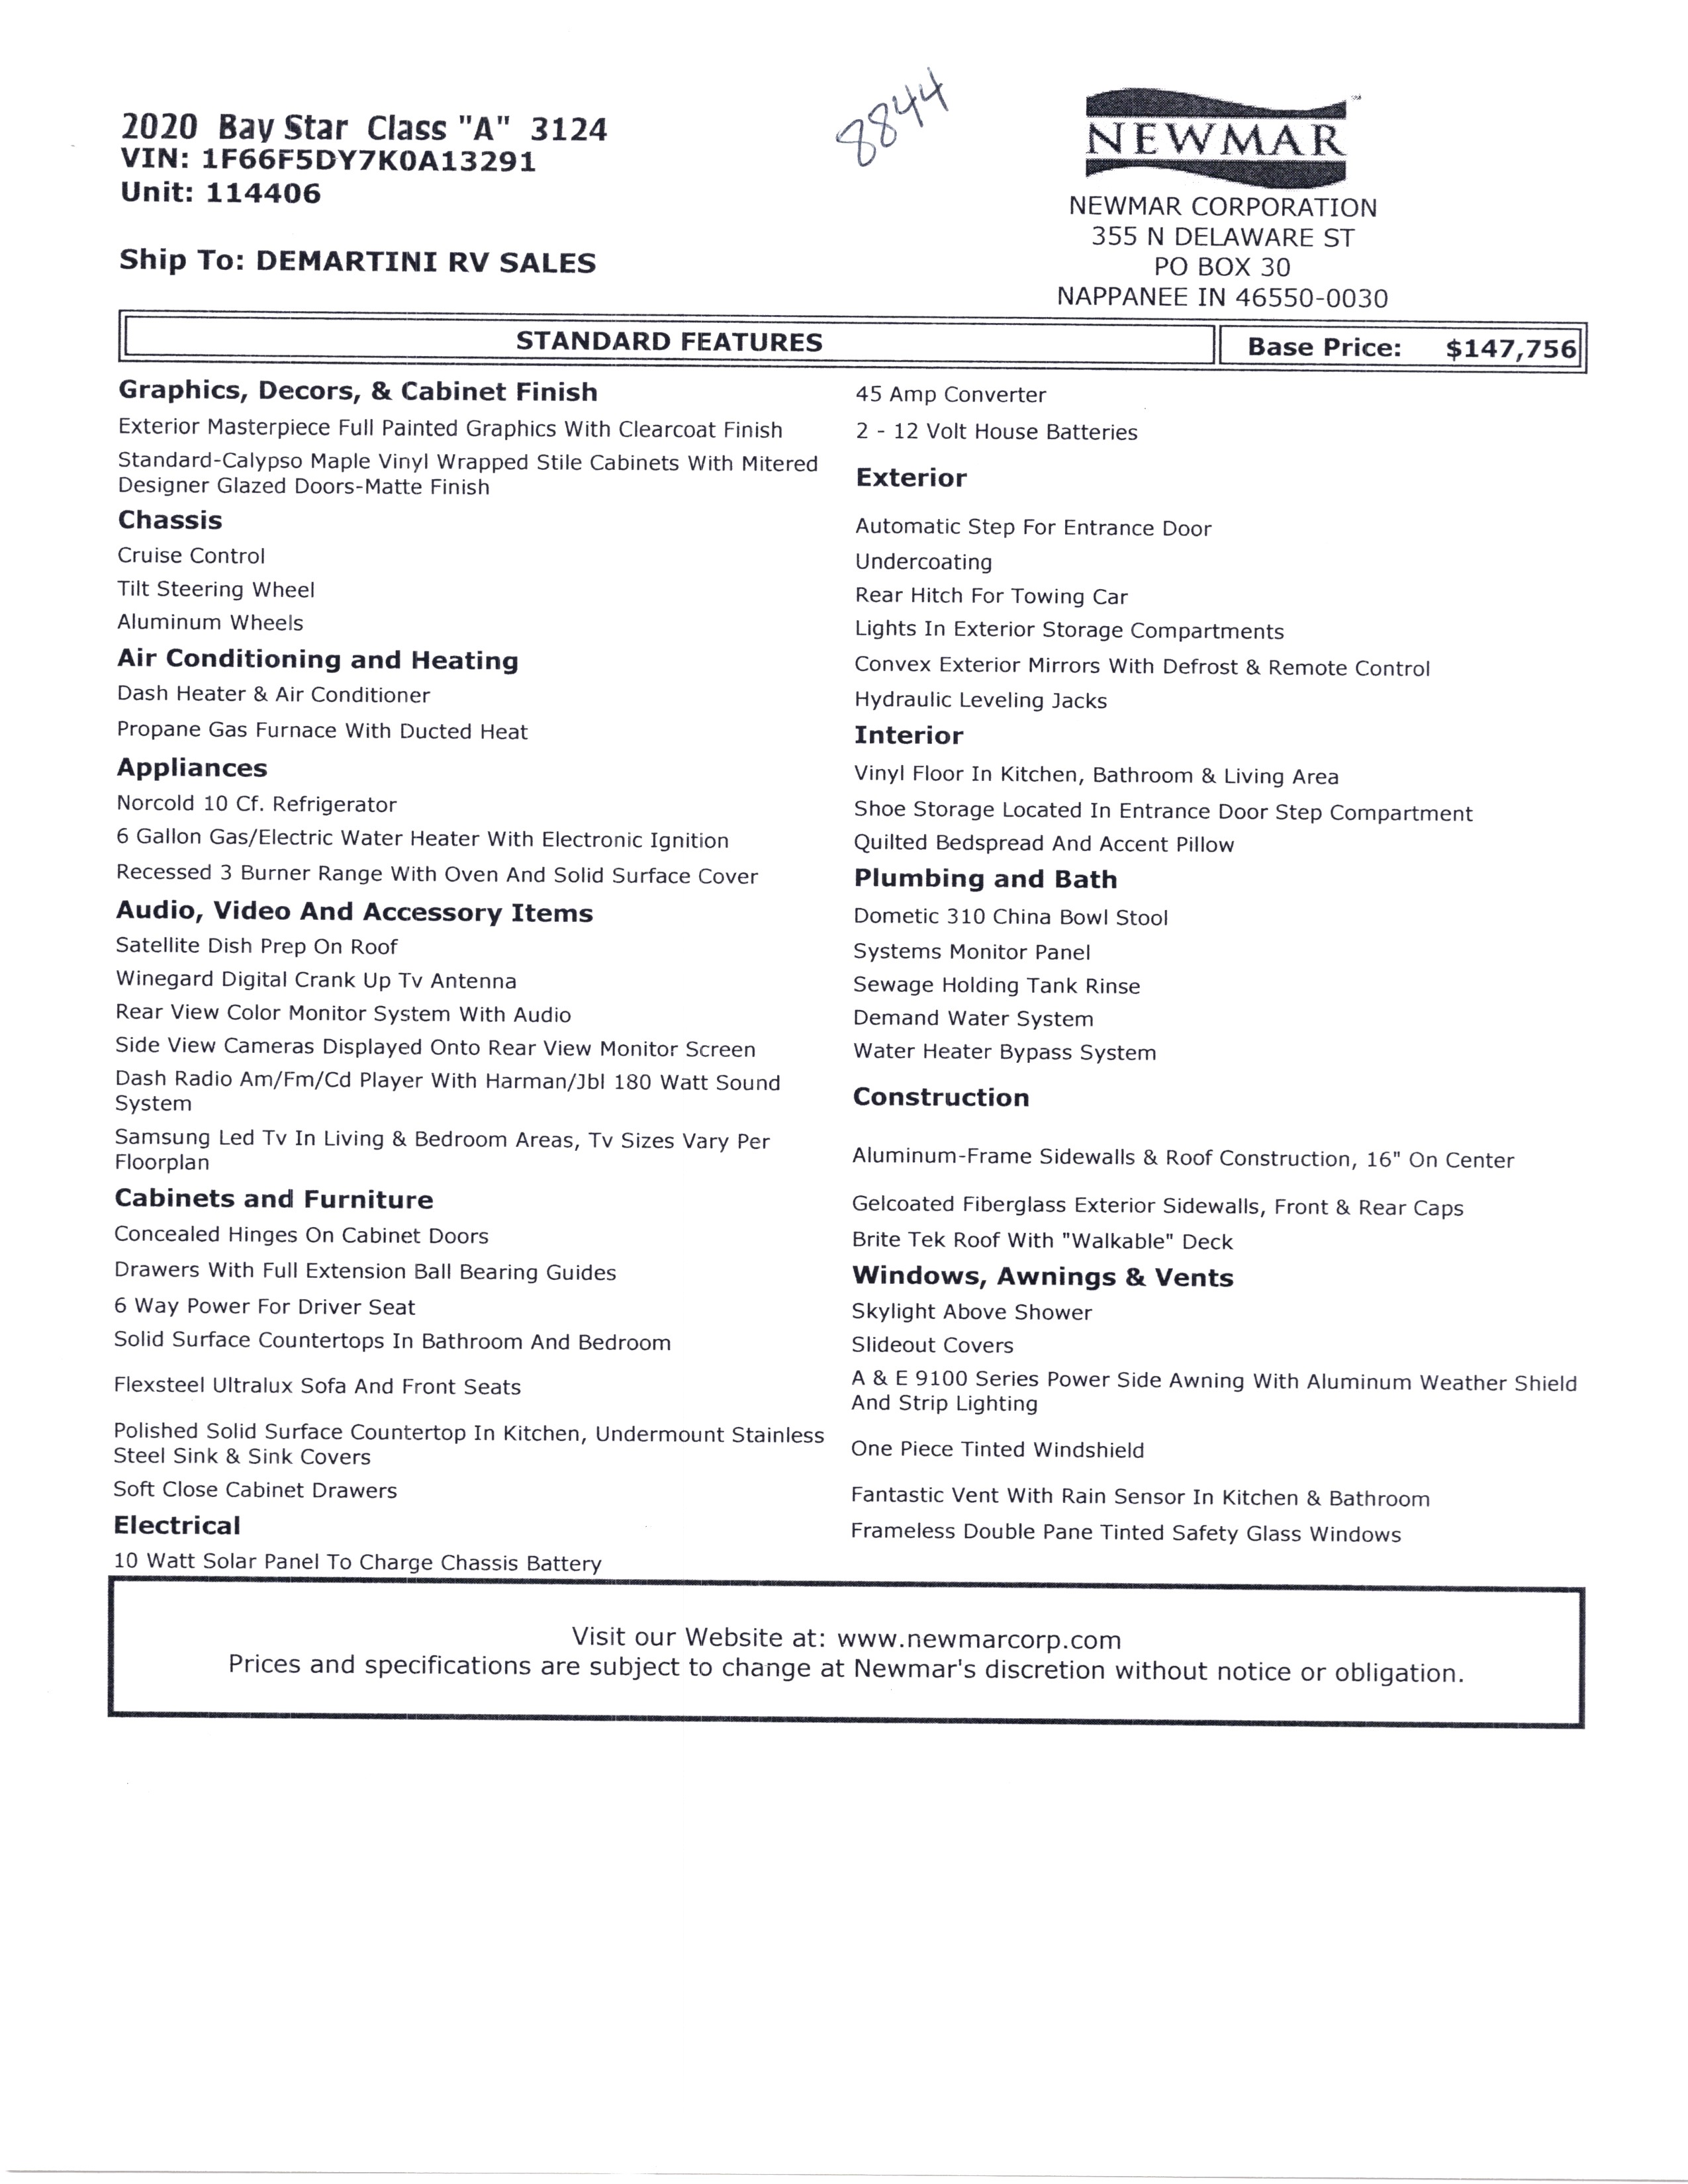 2020 Newmar Bay Star 3124 MSRP Sheet